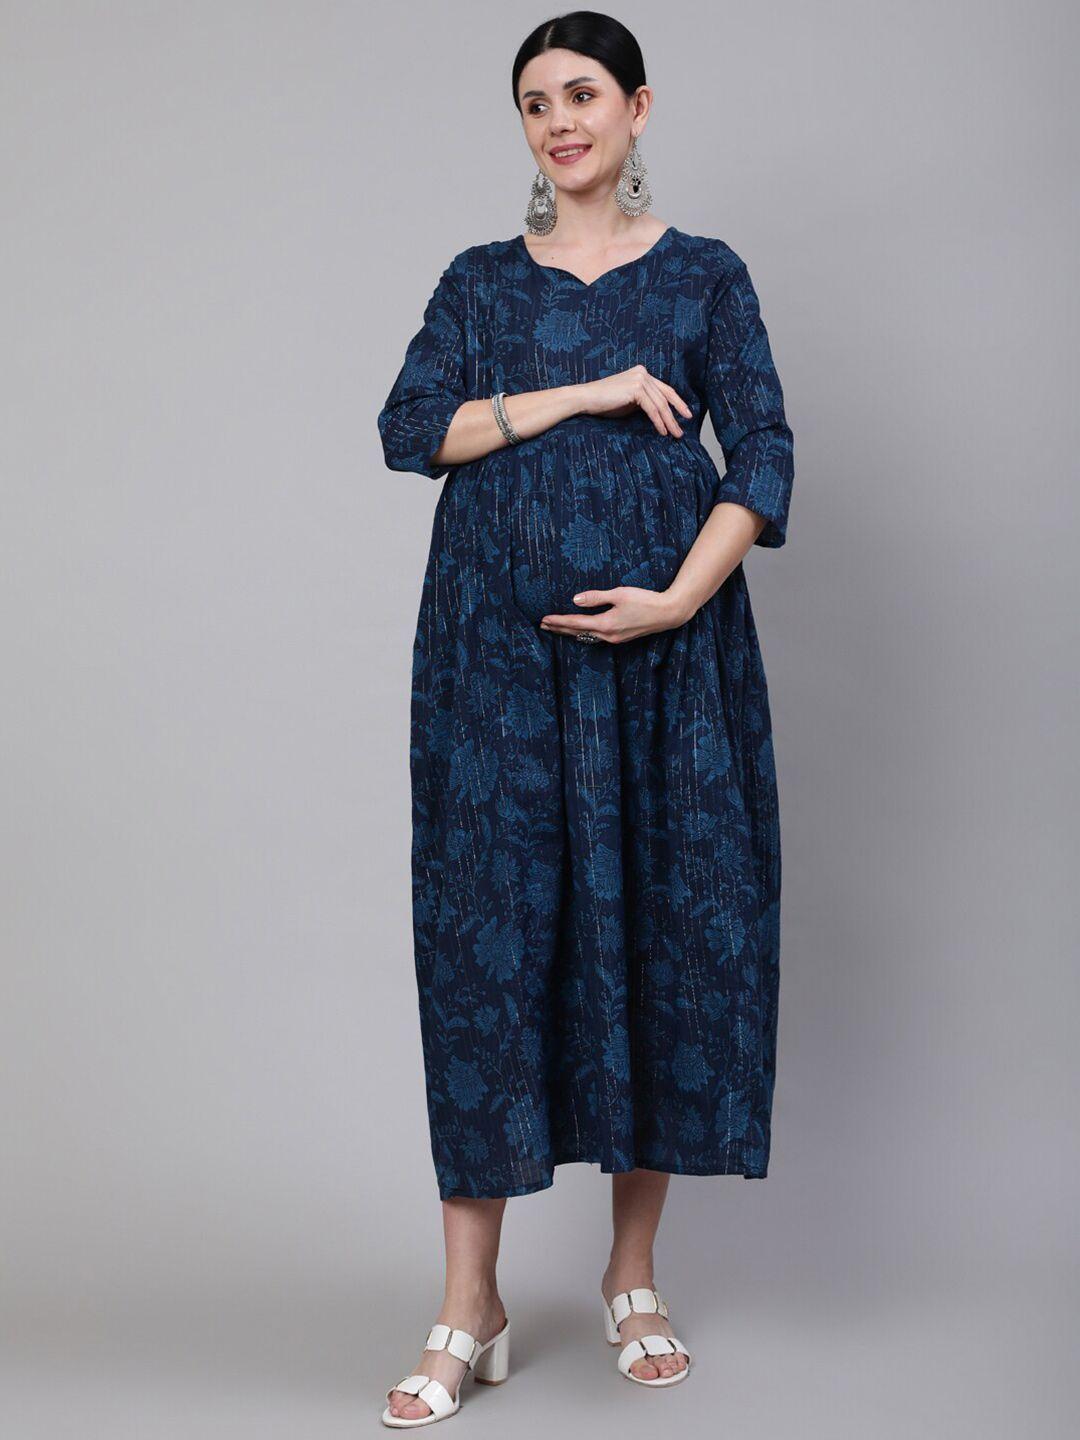 nayo women navy blue ethnic printed maternity dress